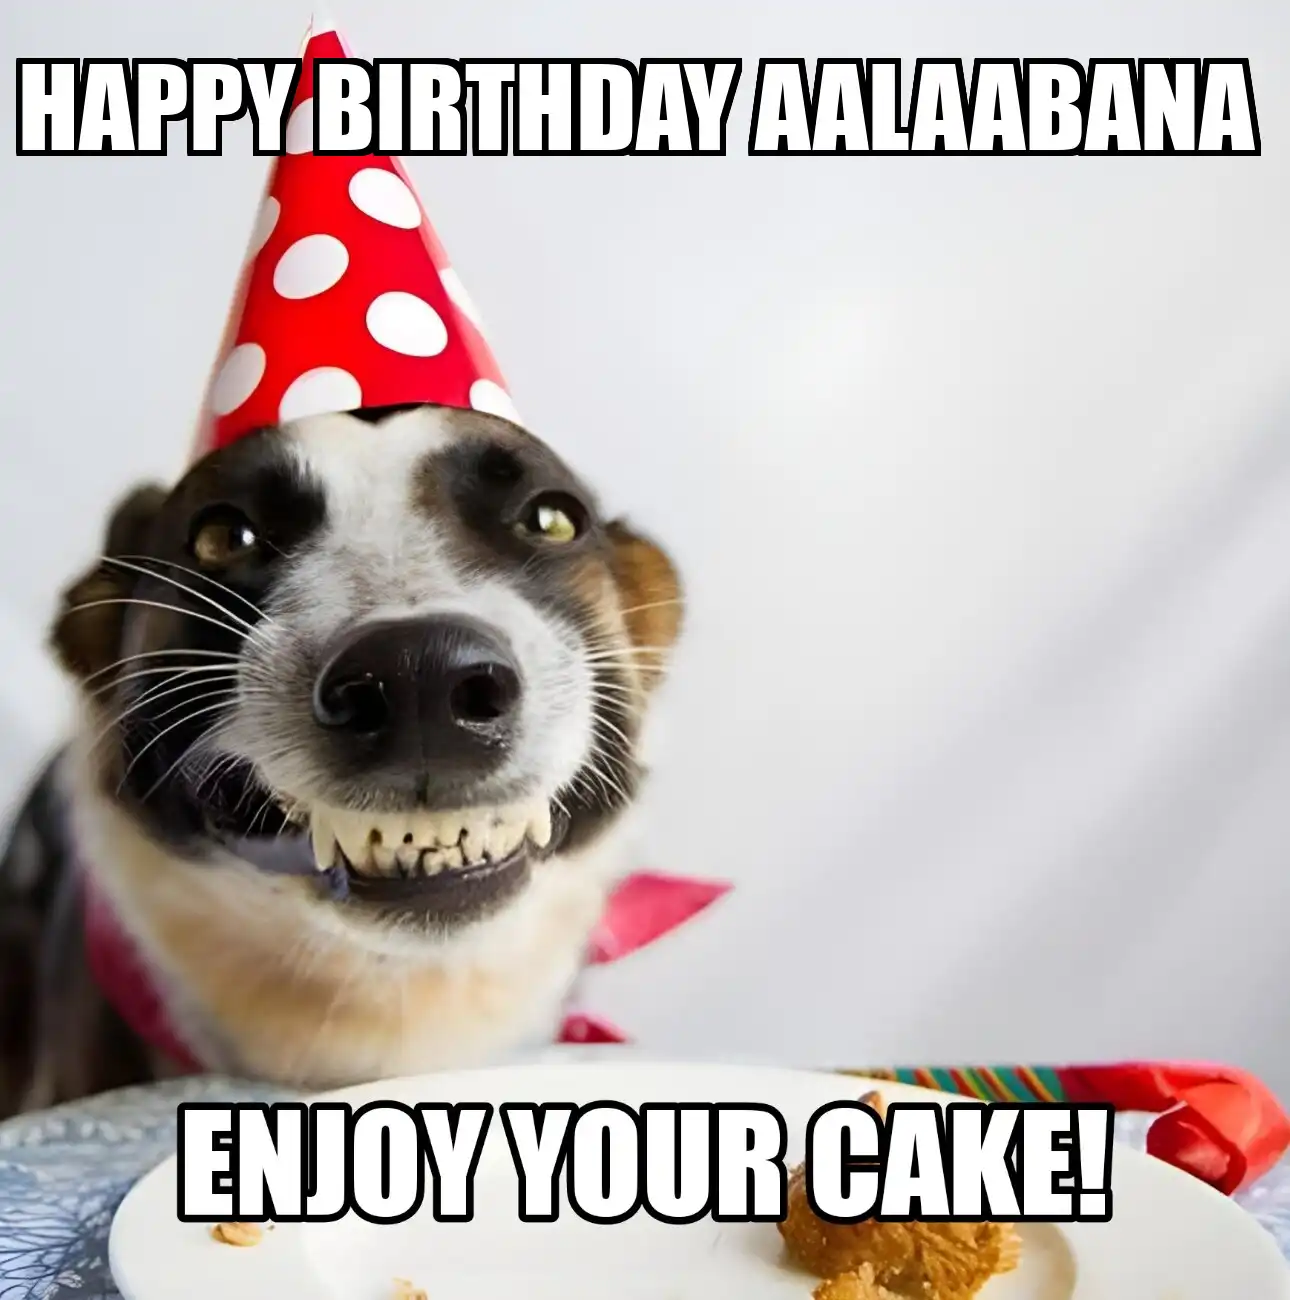 Happy Birthday Aalaabana Enjoy Your Cake Dog Meme